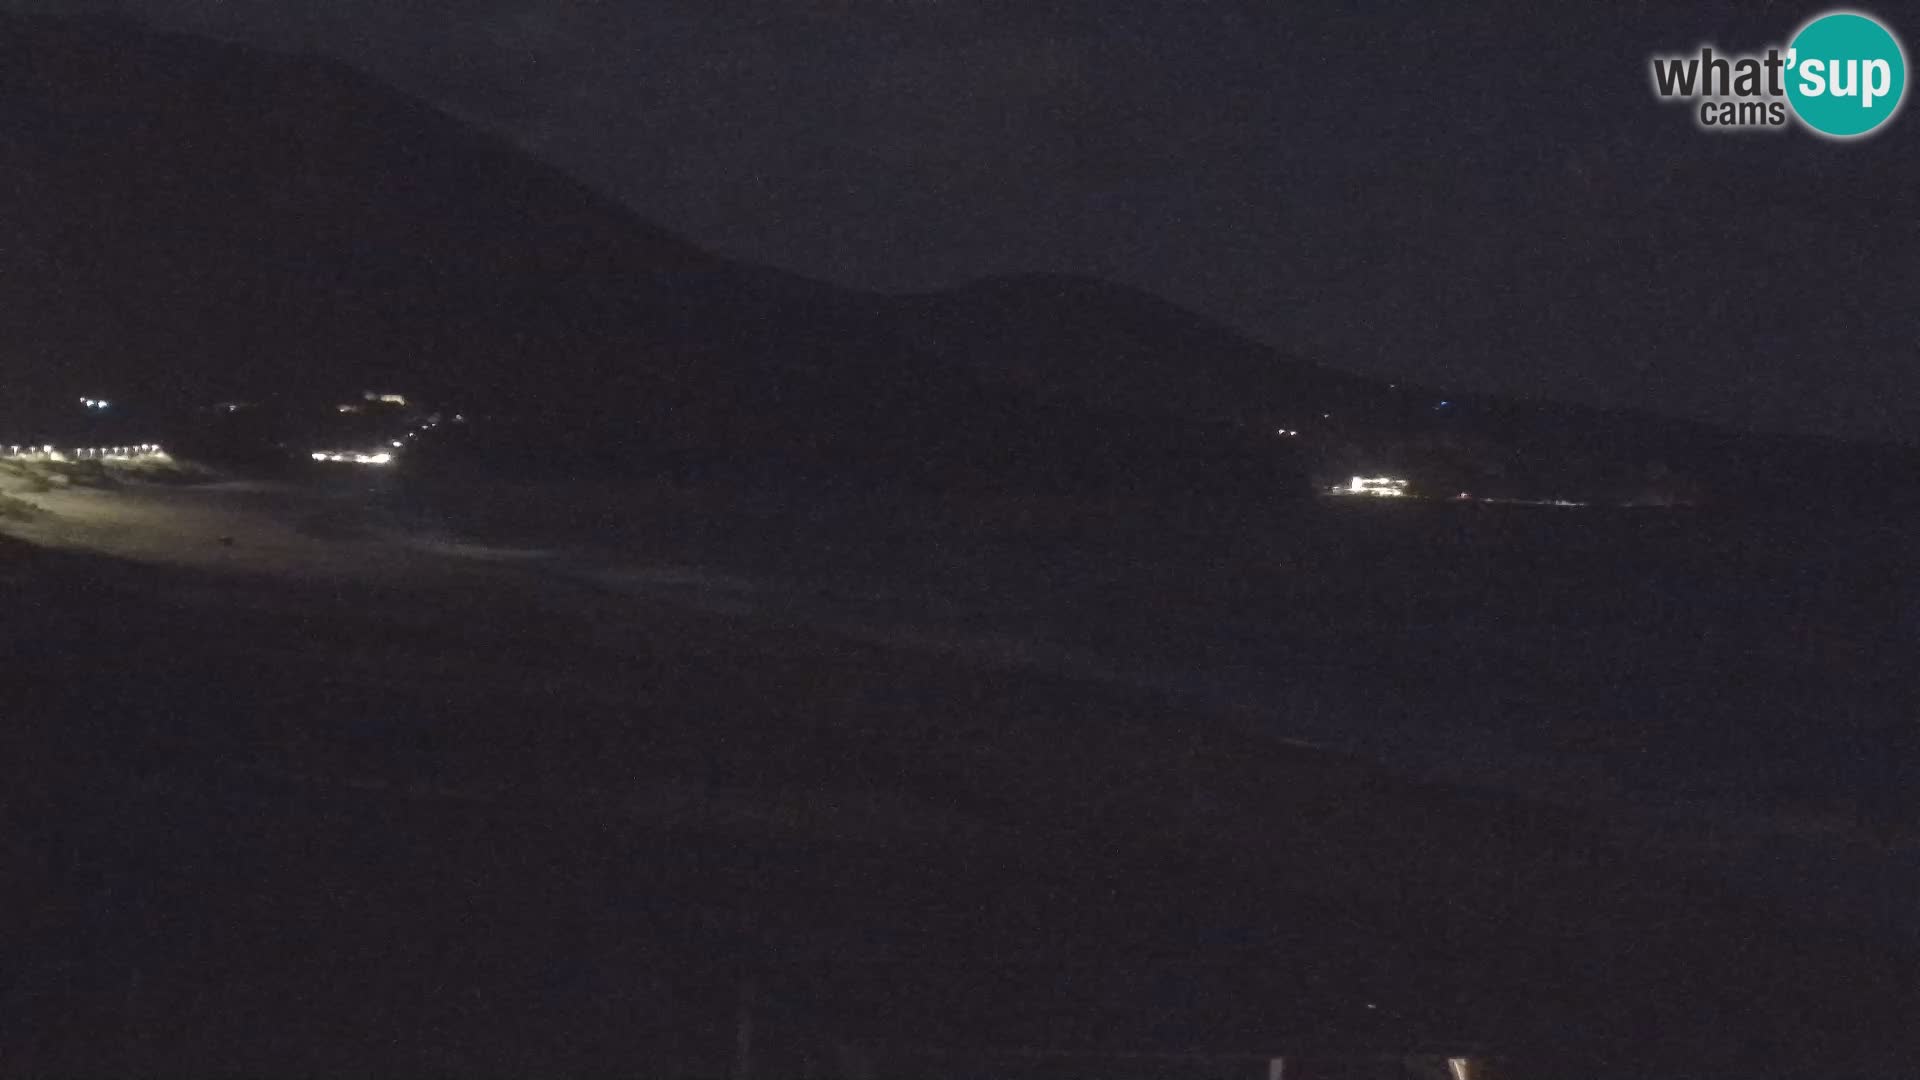 Spiaggia di San Nicolò webcam a Buggerru, Sardegna – Ammira le onde e i tramonti